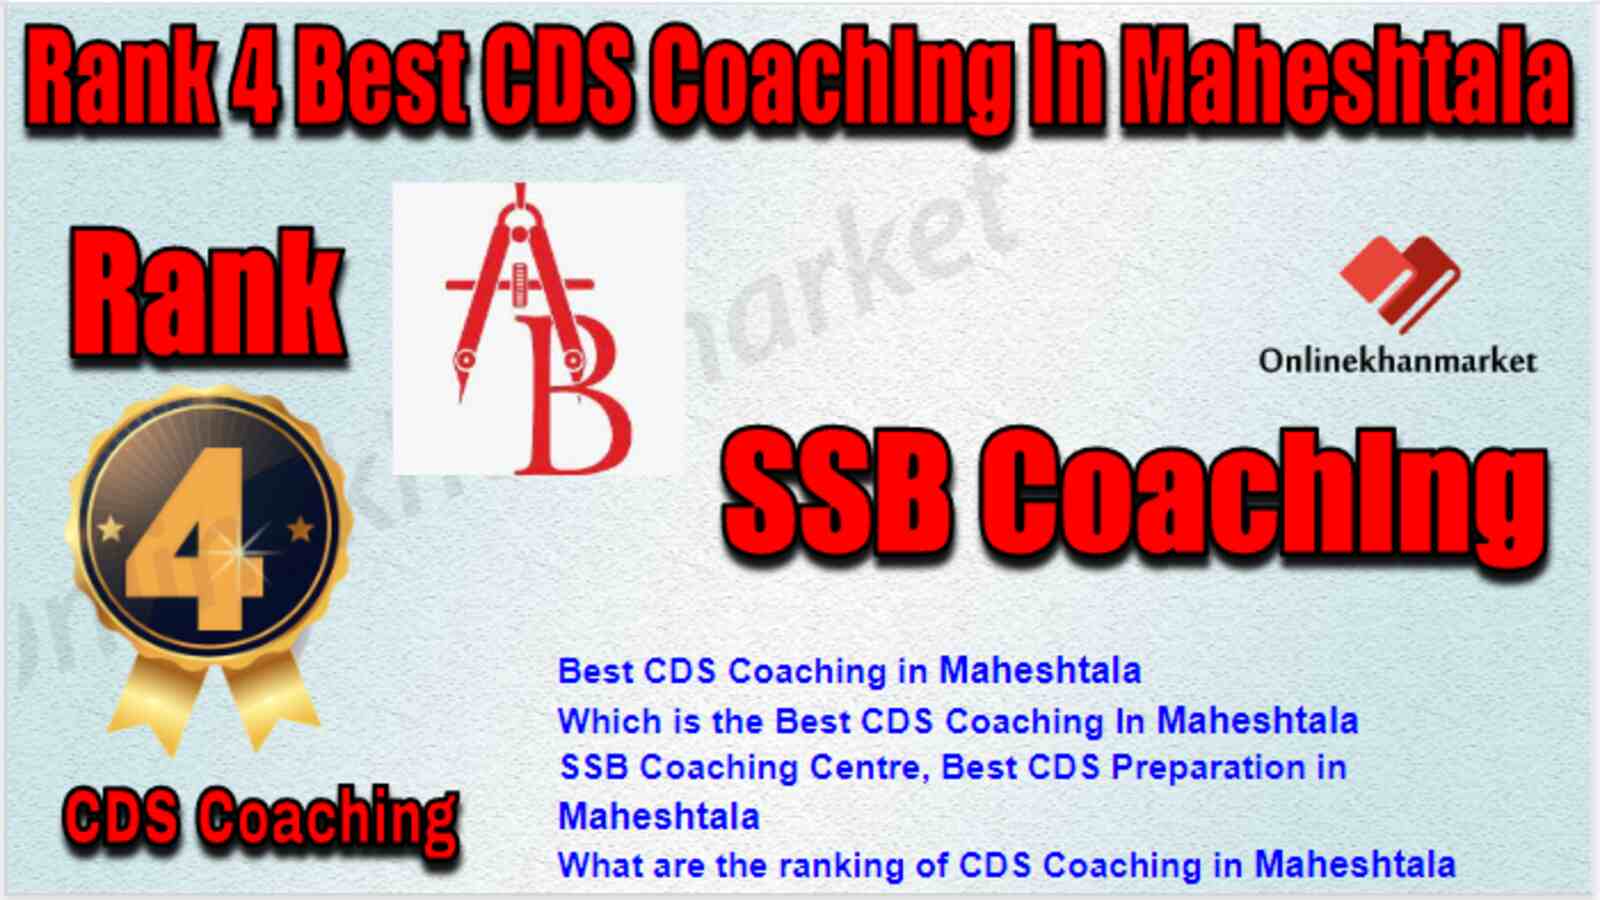 Rank 4 Best CDS Coaching in Maheshtala